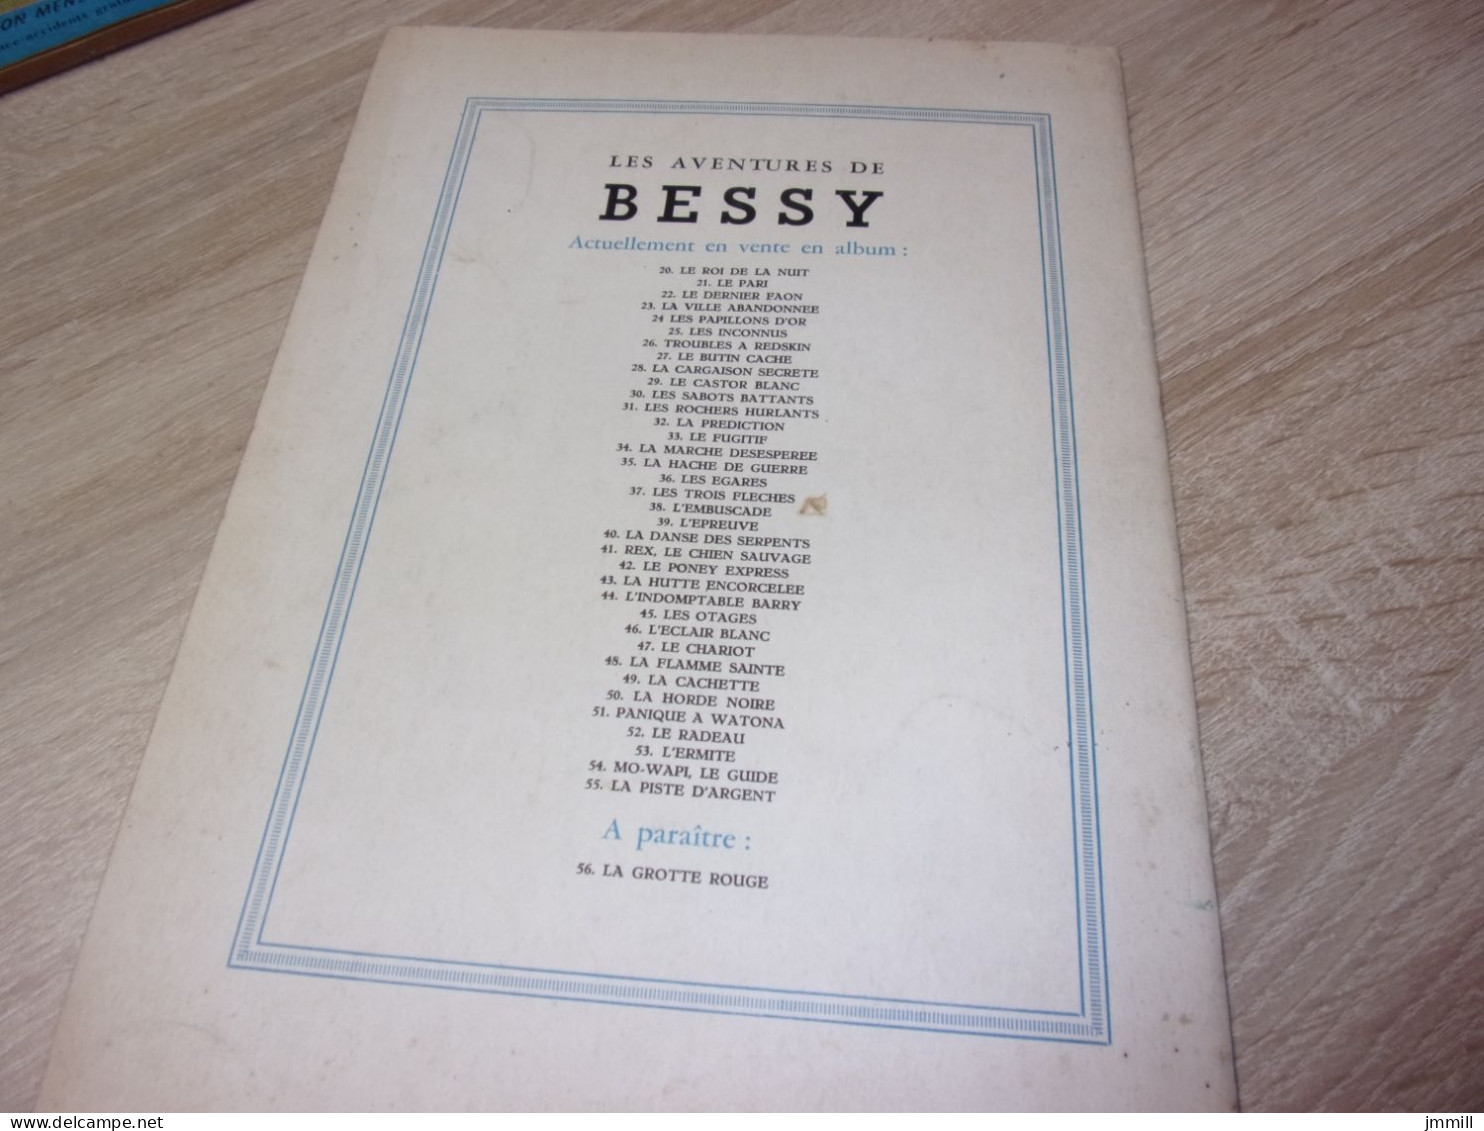 Vandersteen : Bessy Edition Originale 57 La Plaine Aride - Bessy